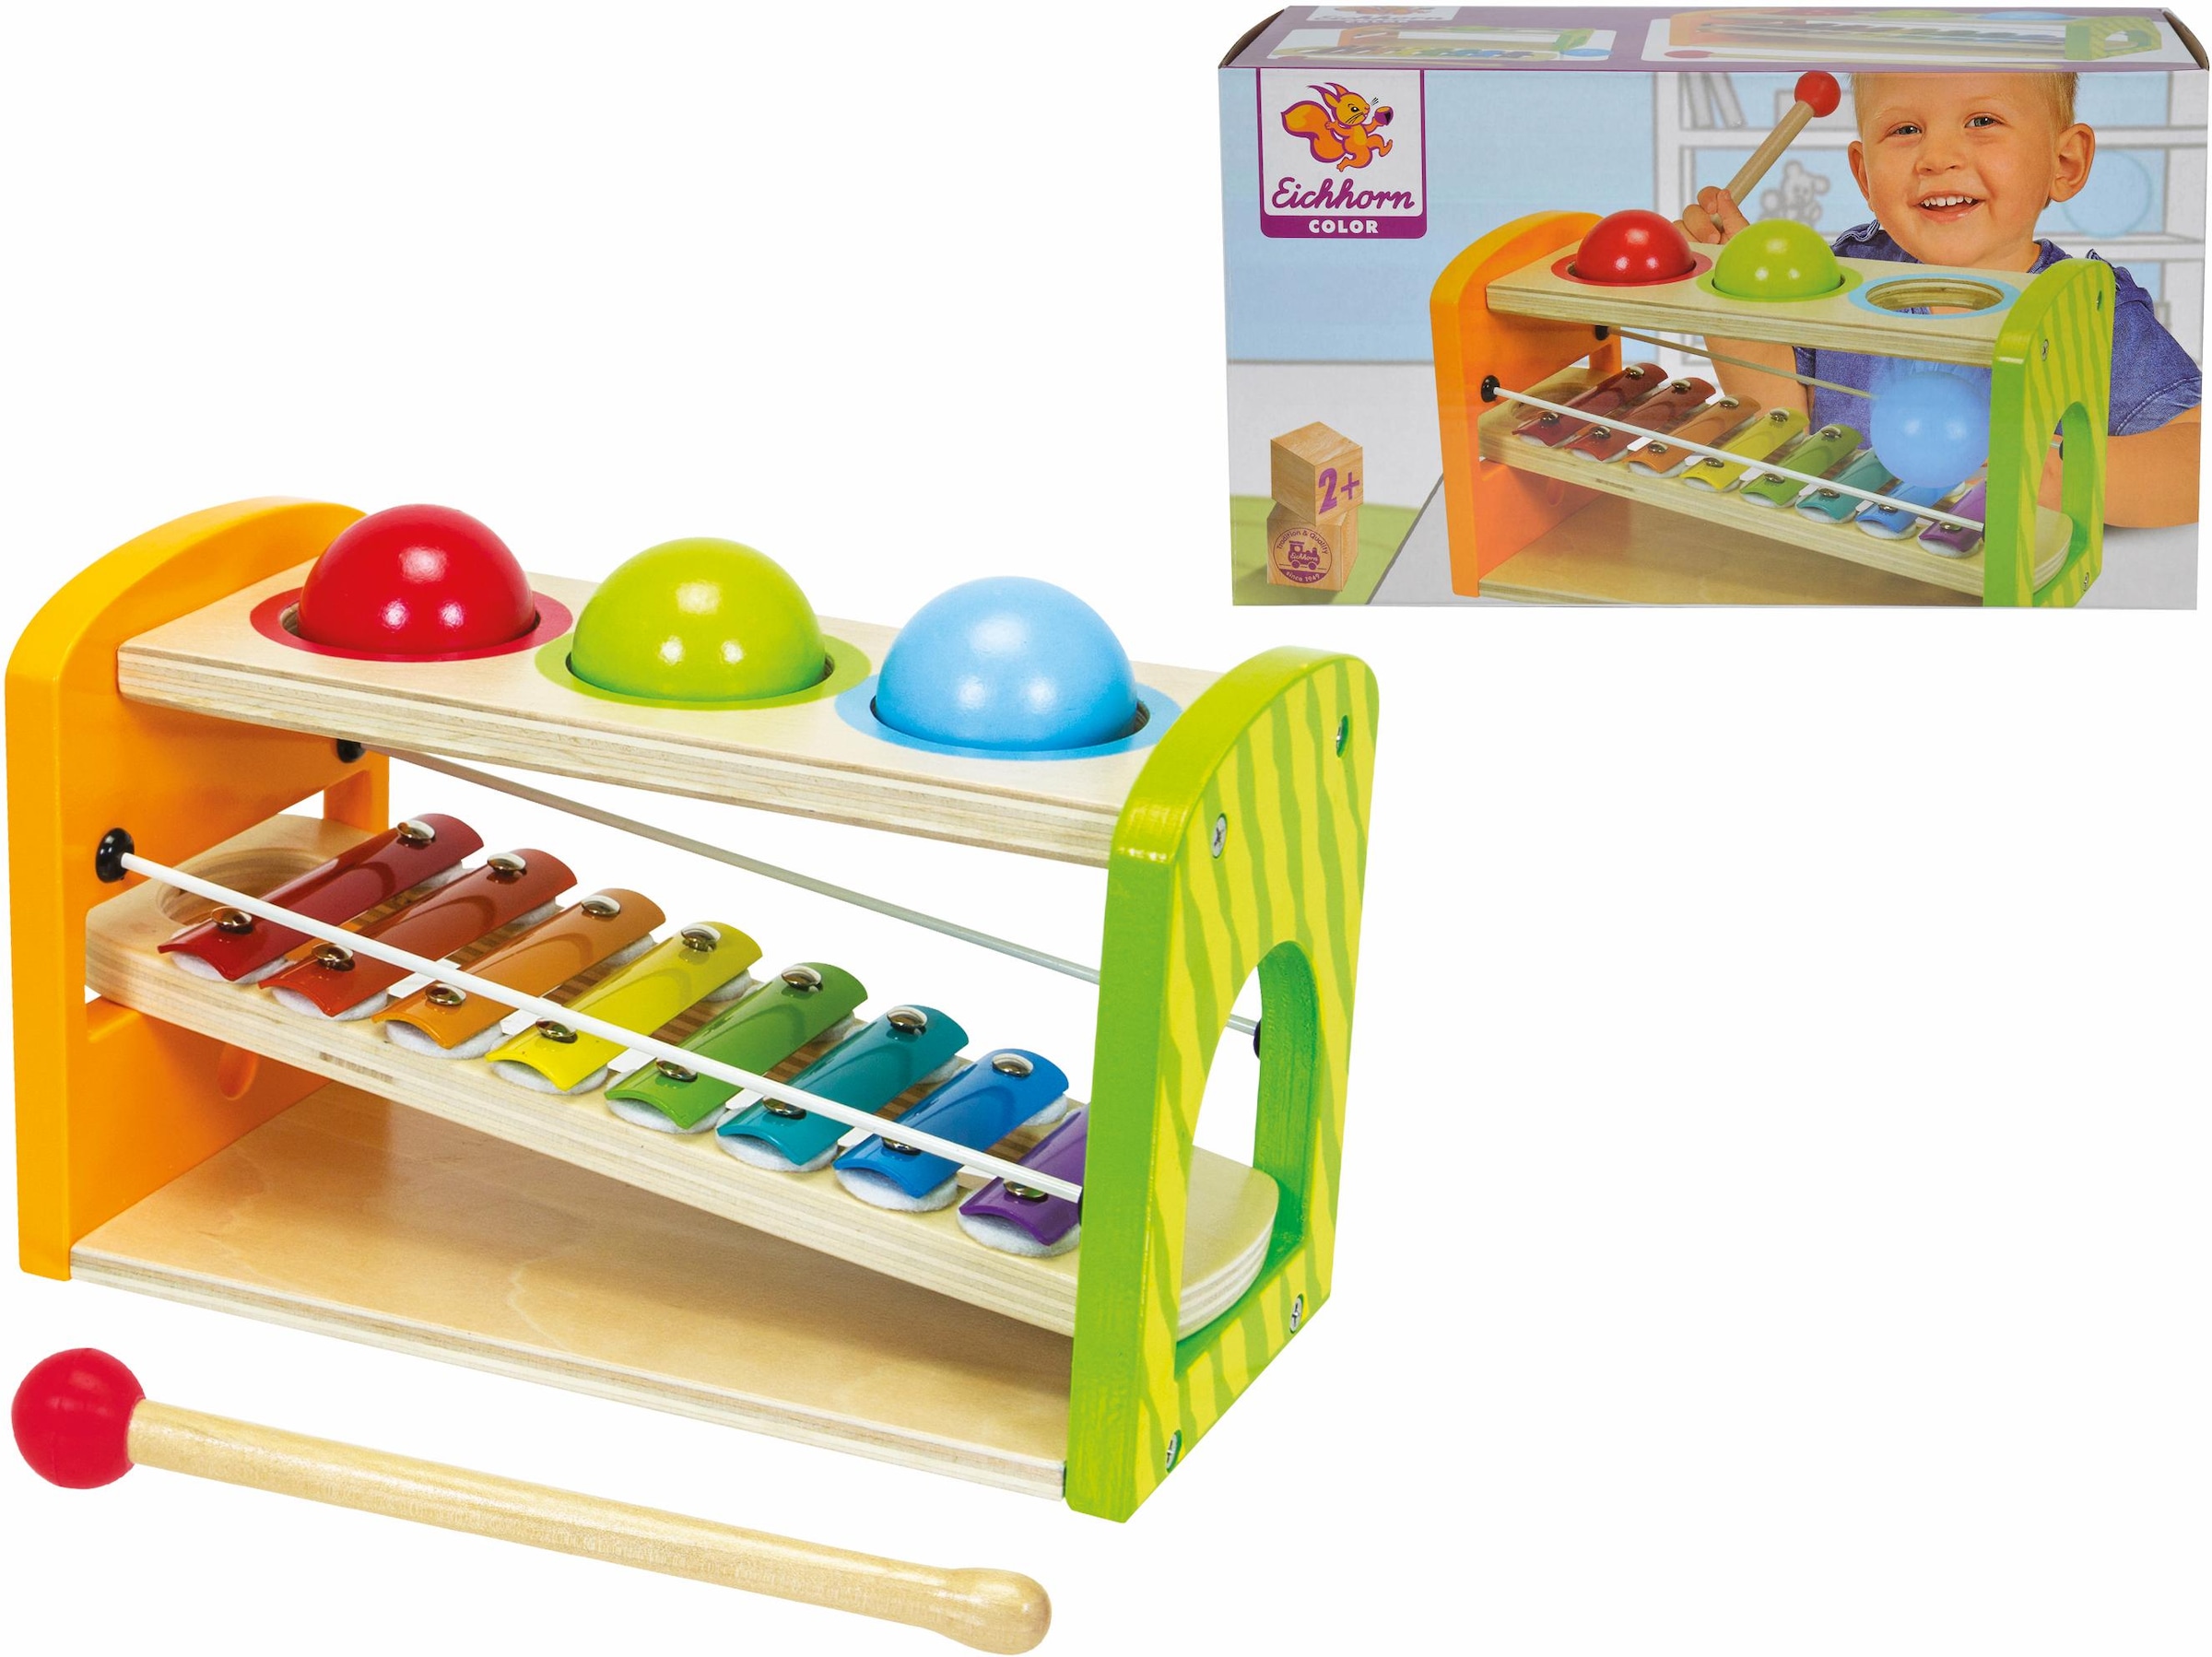 Spielzeug-Musikinstrument »Color, Xylophon Klopfbank«, aus Holz